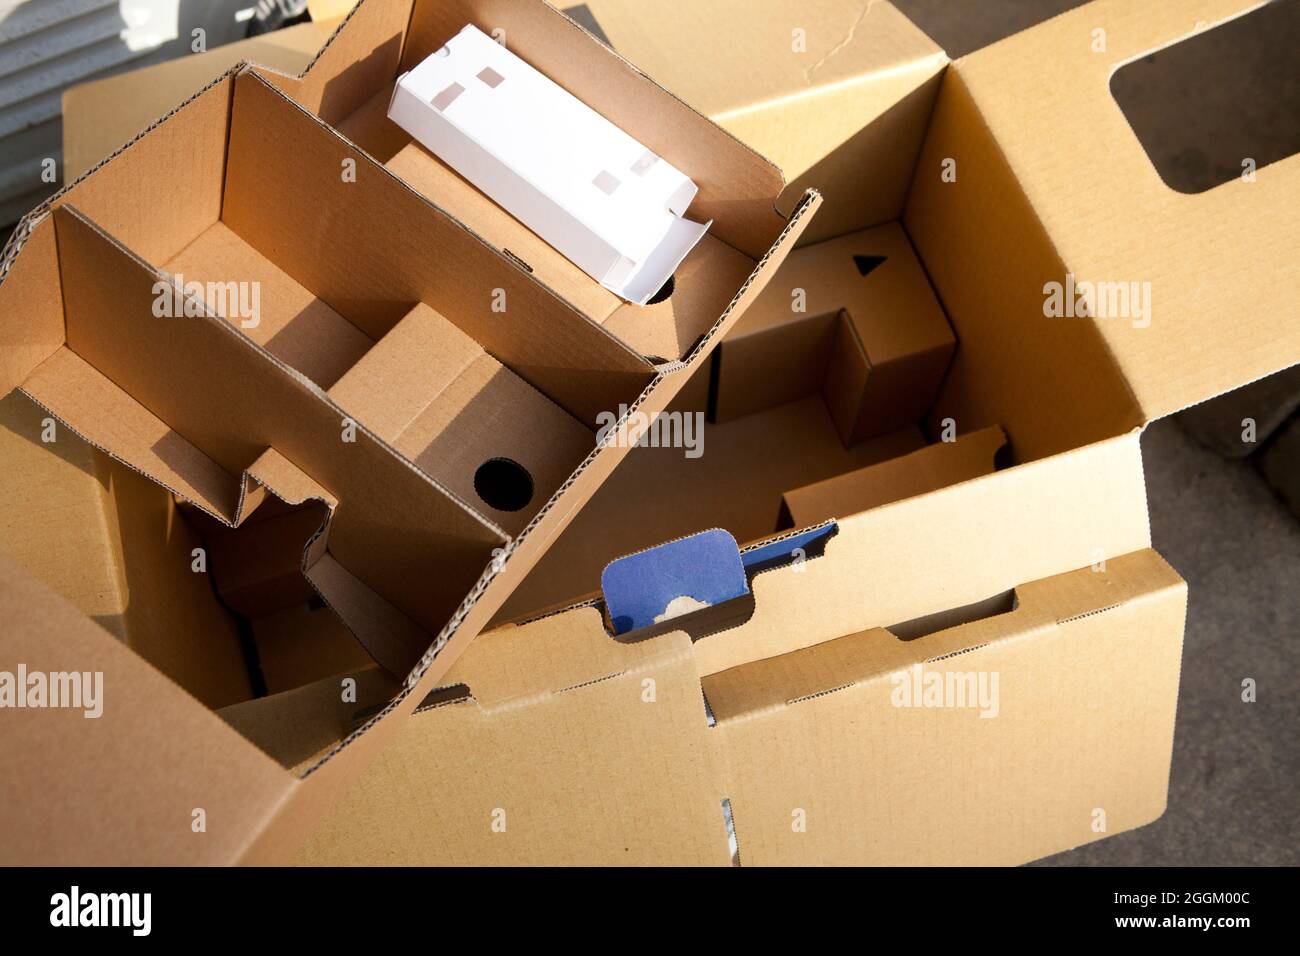 Embalaje de cartón (embalaje reciclable) - EE.UU Foto de stock